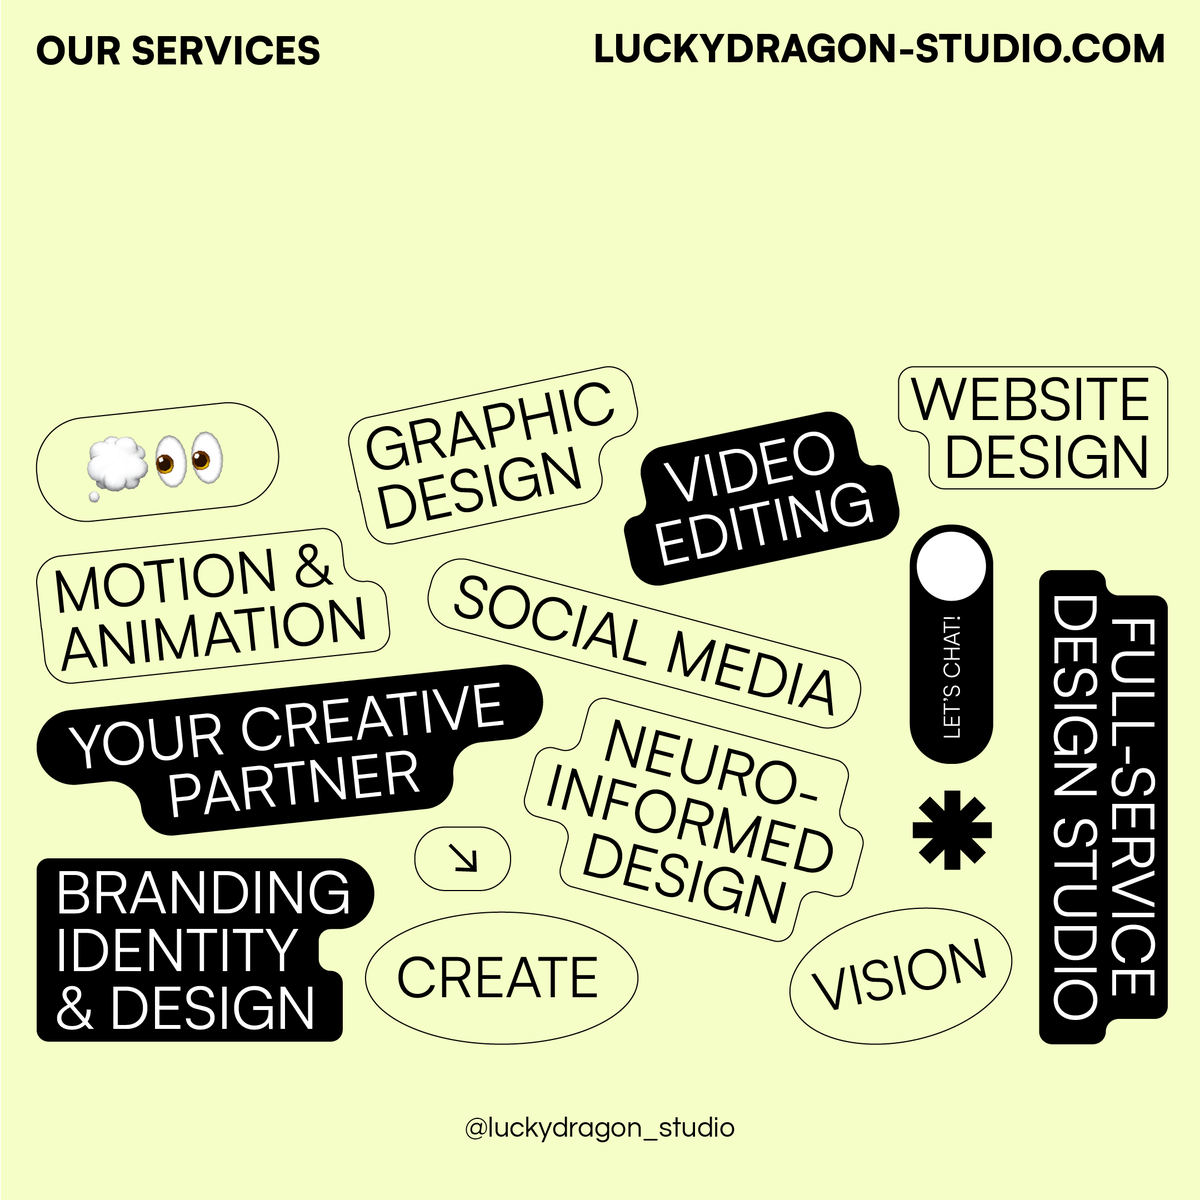 Are your ready to elevate your brand or start-up 🚀your new venture? ✨#designstudio #creatives 

#creativestudio #rebrand #graphicdesign #videoediting #animation #branding #socialmedia #websitedesign #neuroinformed #luckydragonstudio